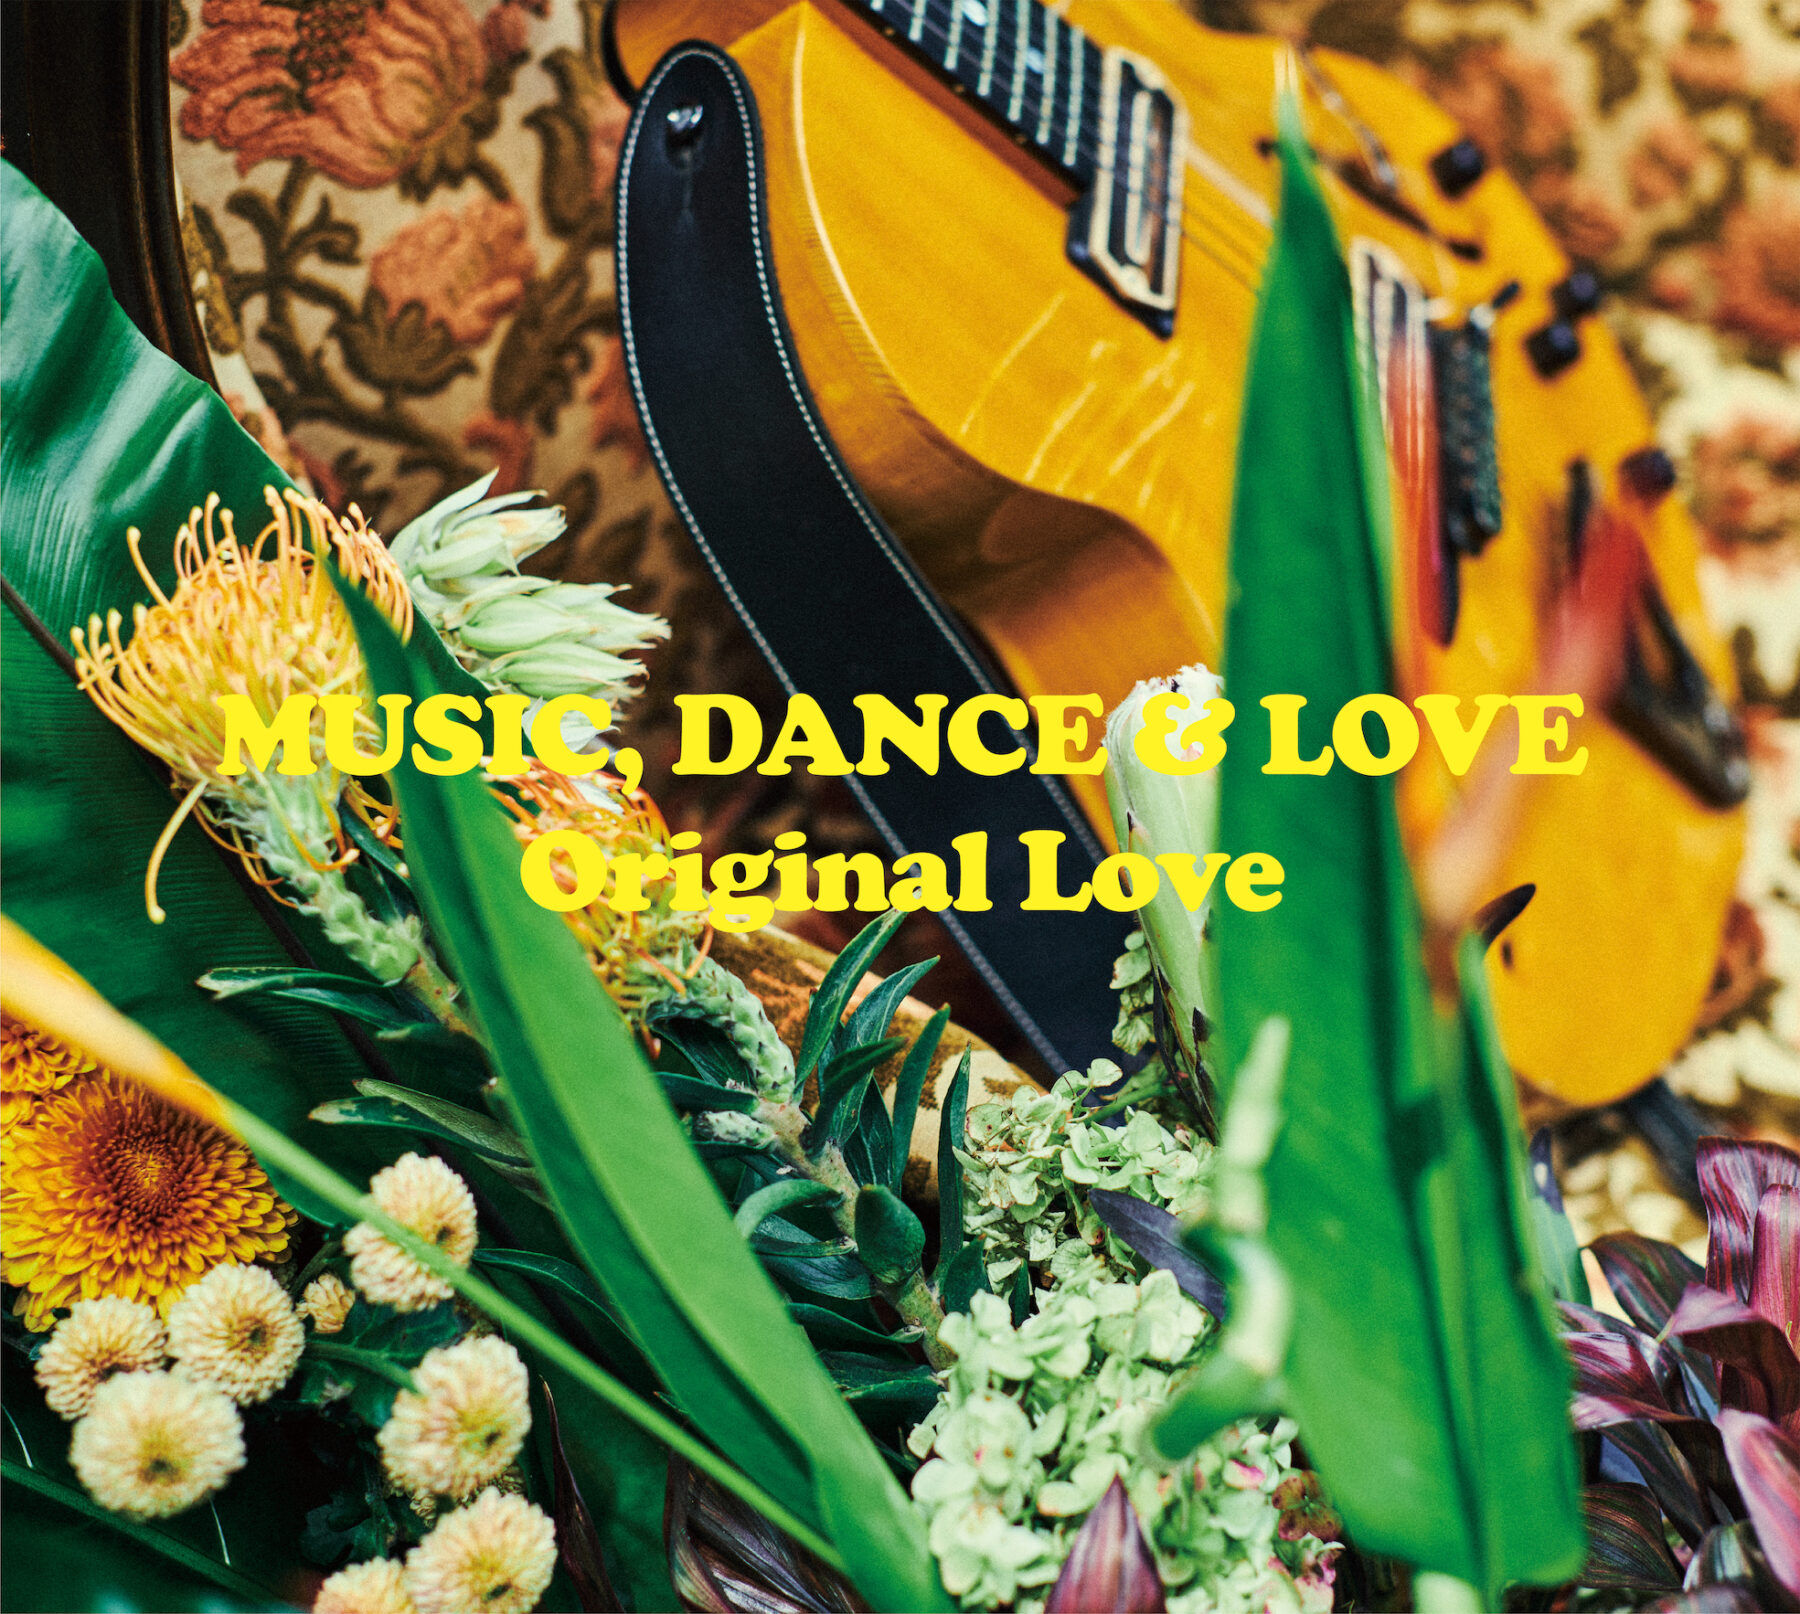 『MUSIC, DANCE & LOVE』ジャケット